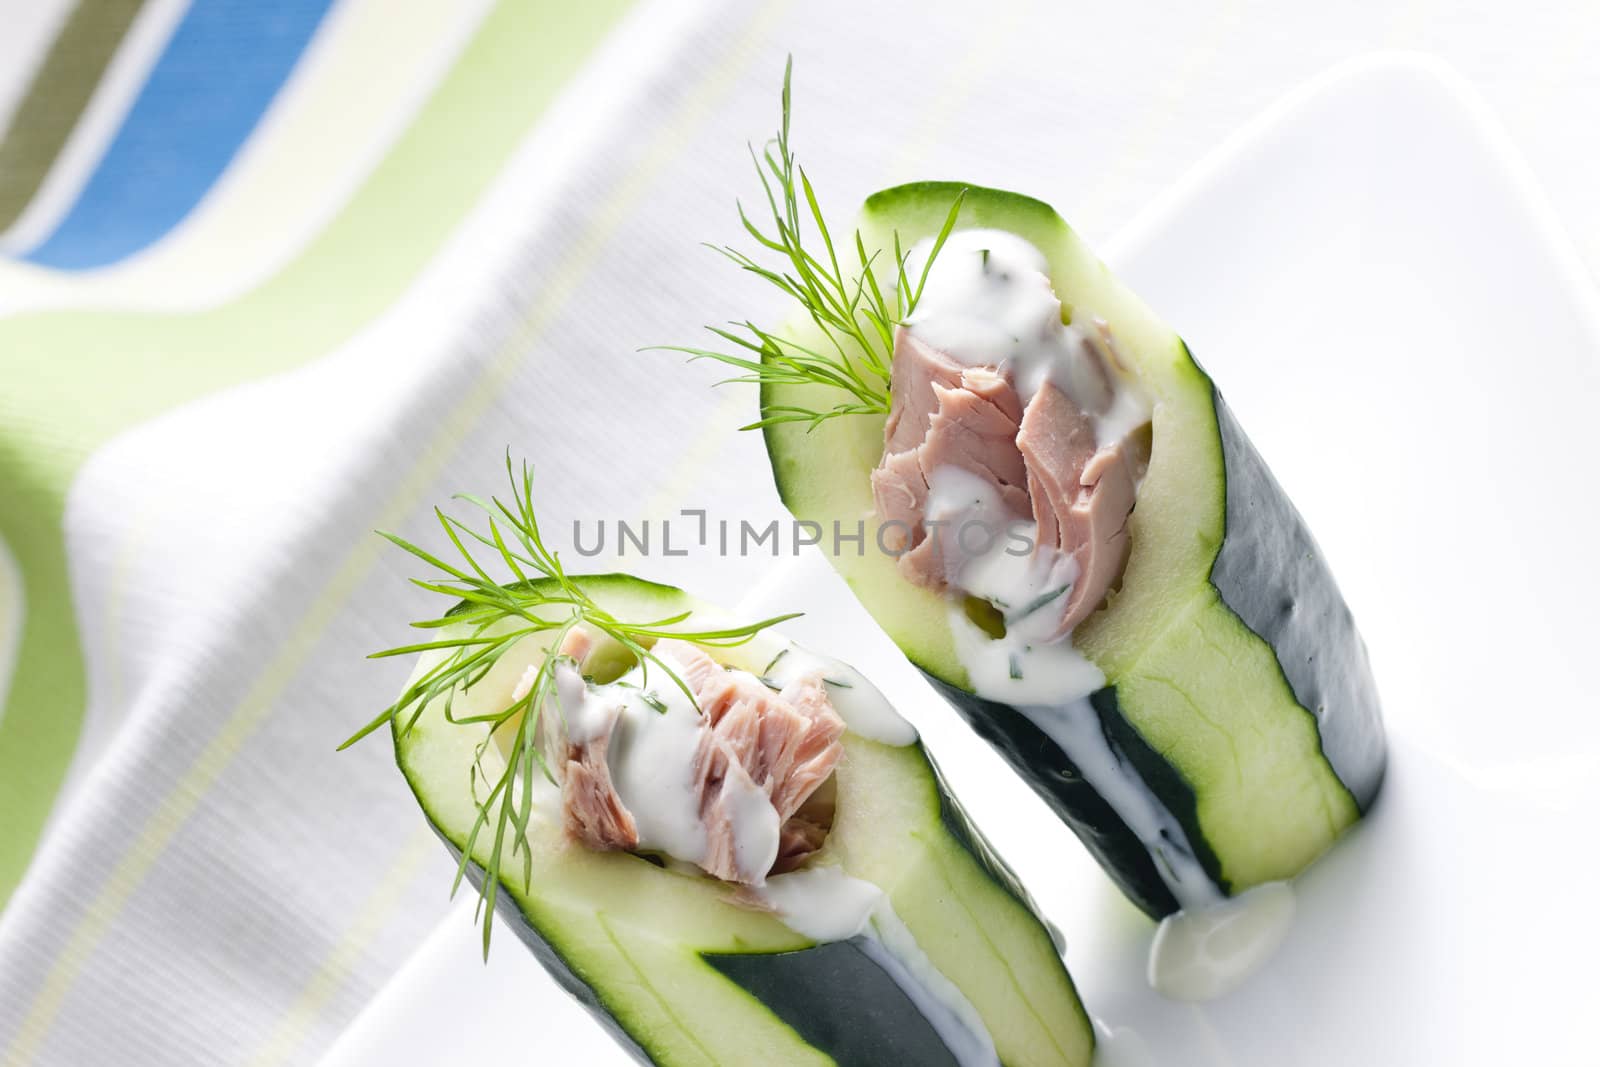 tuna salad in cucumber by phbcz